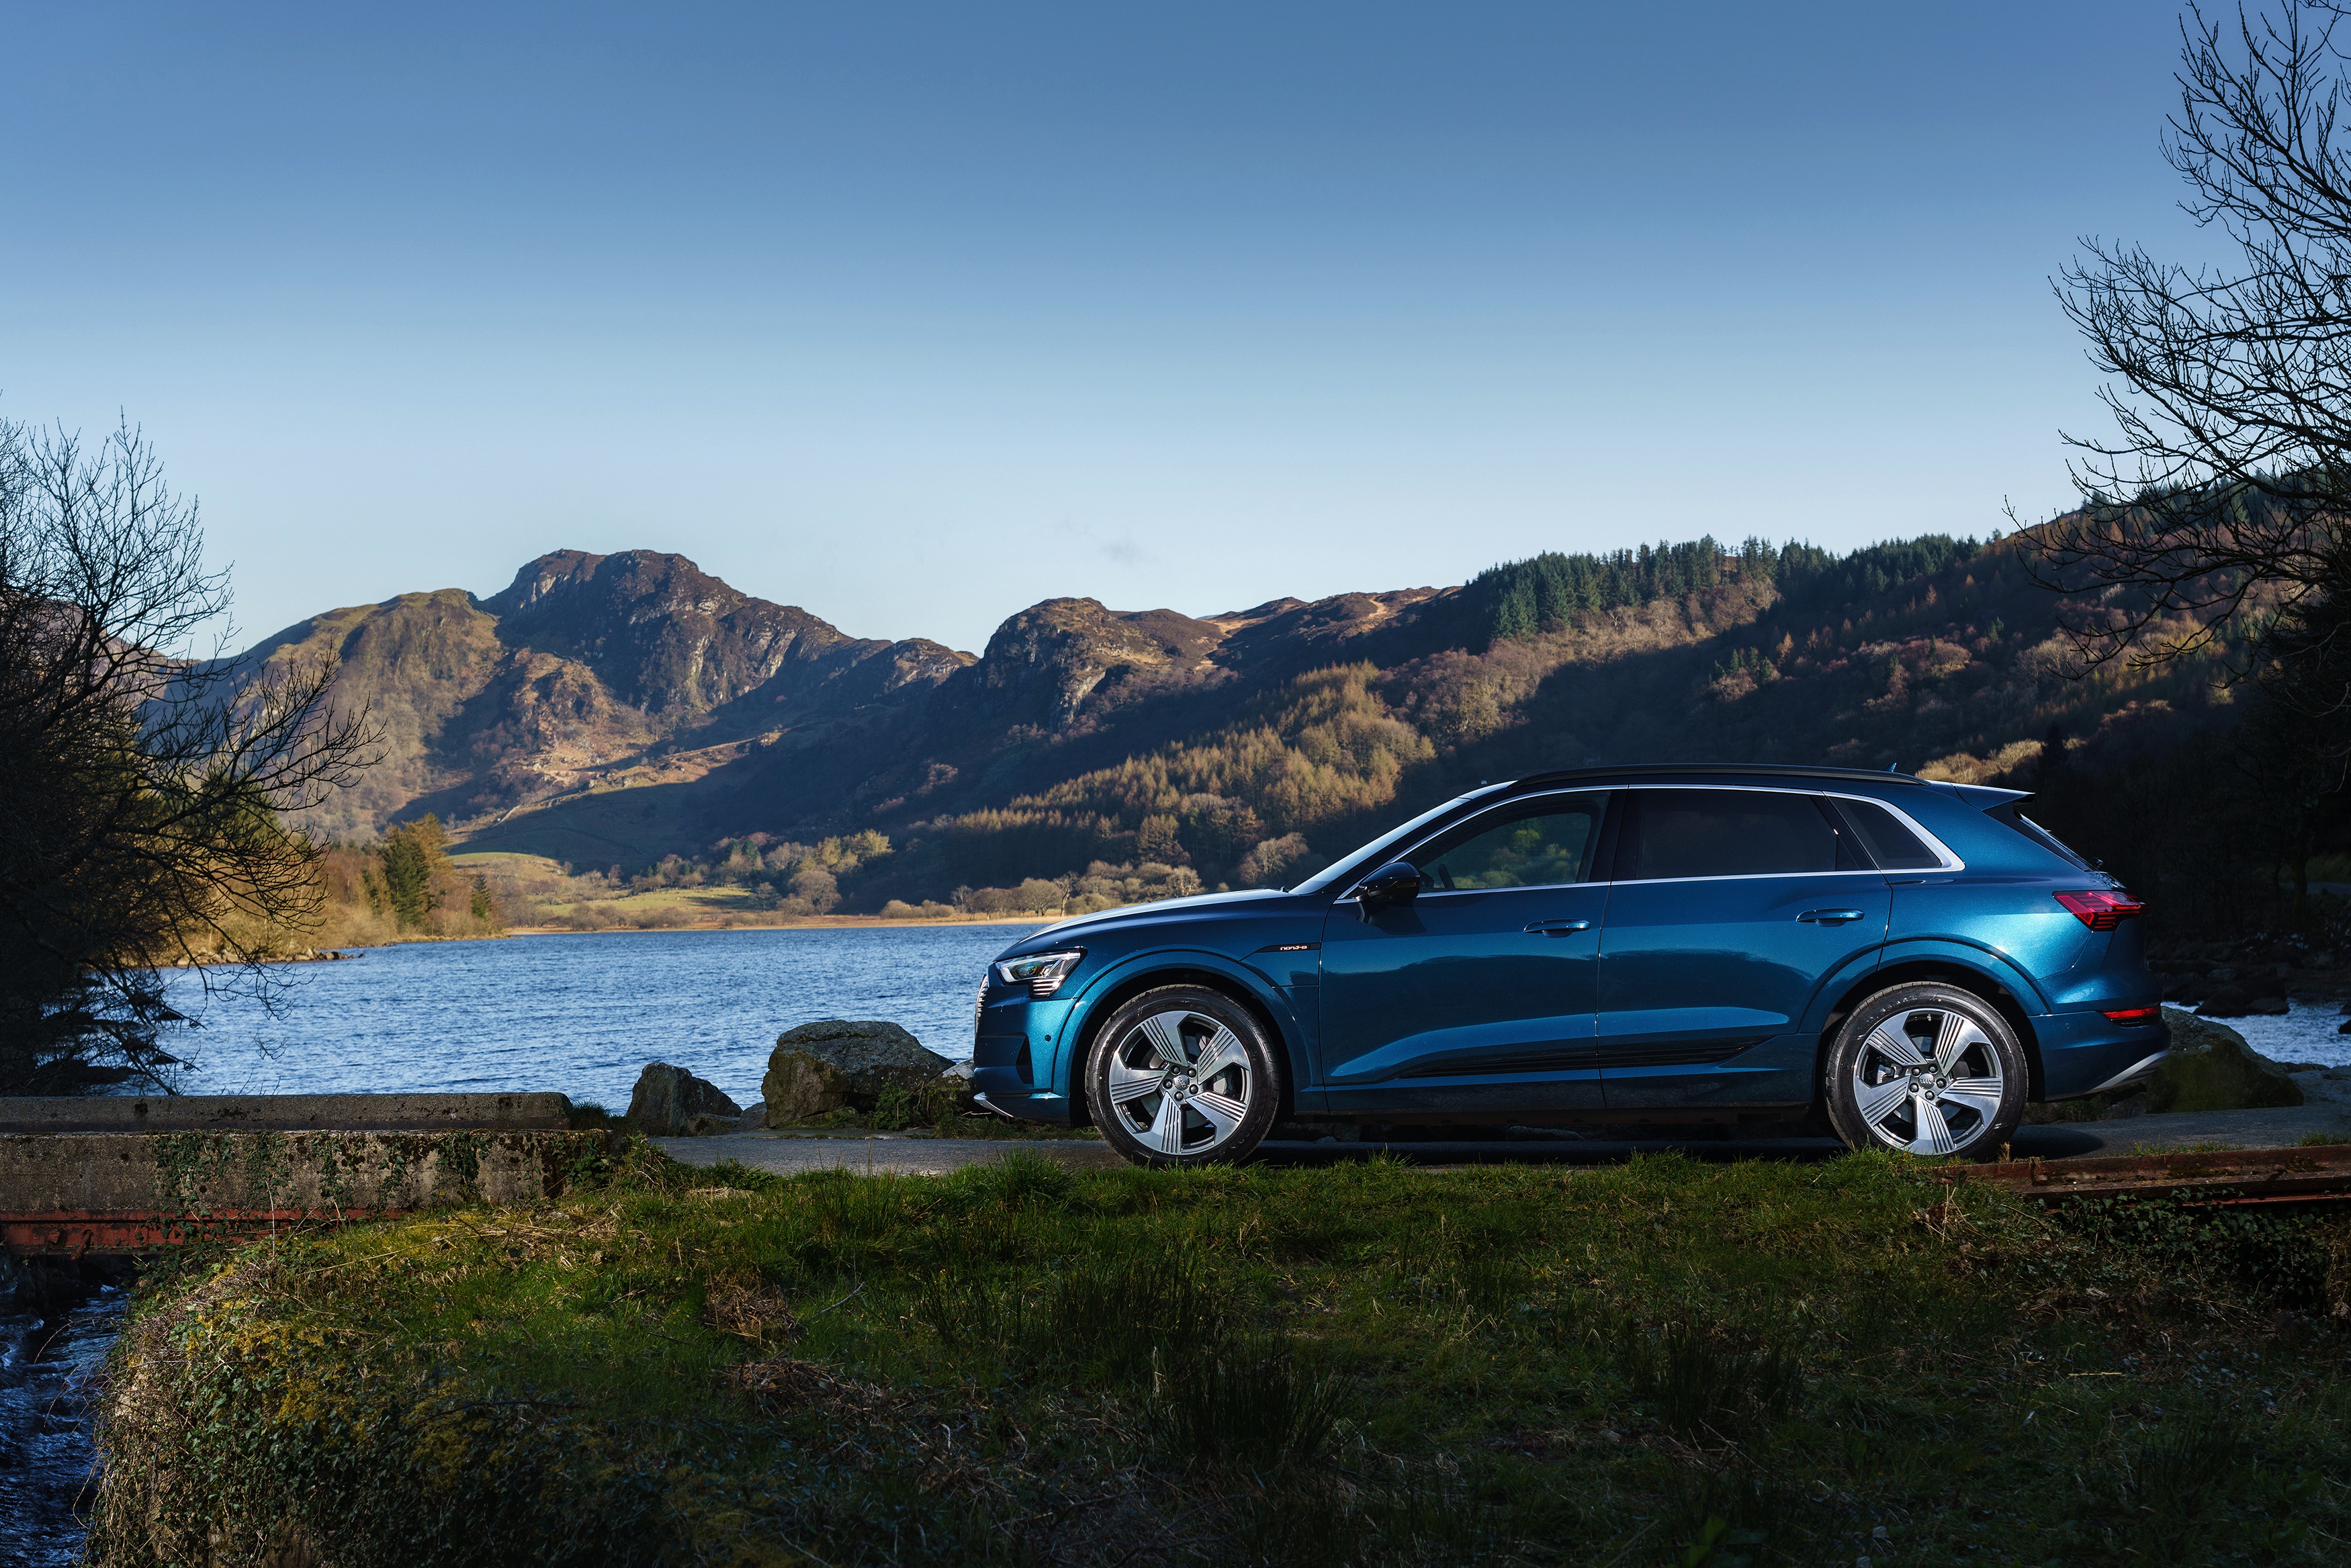 Audi Audi Q7 Blue Car Car Luxury Car Suv Vehicle 3500x2335